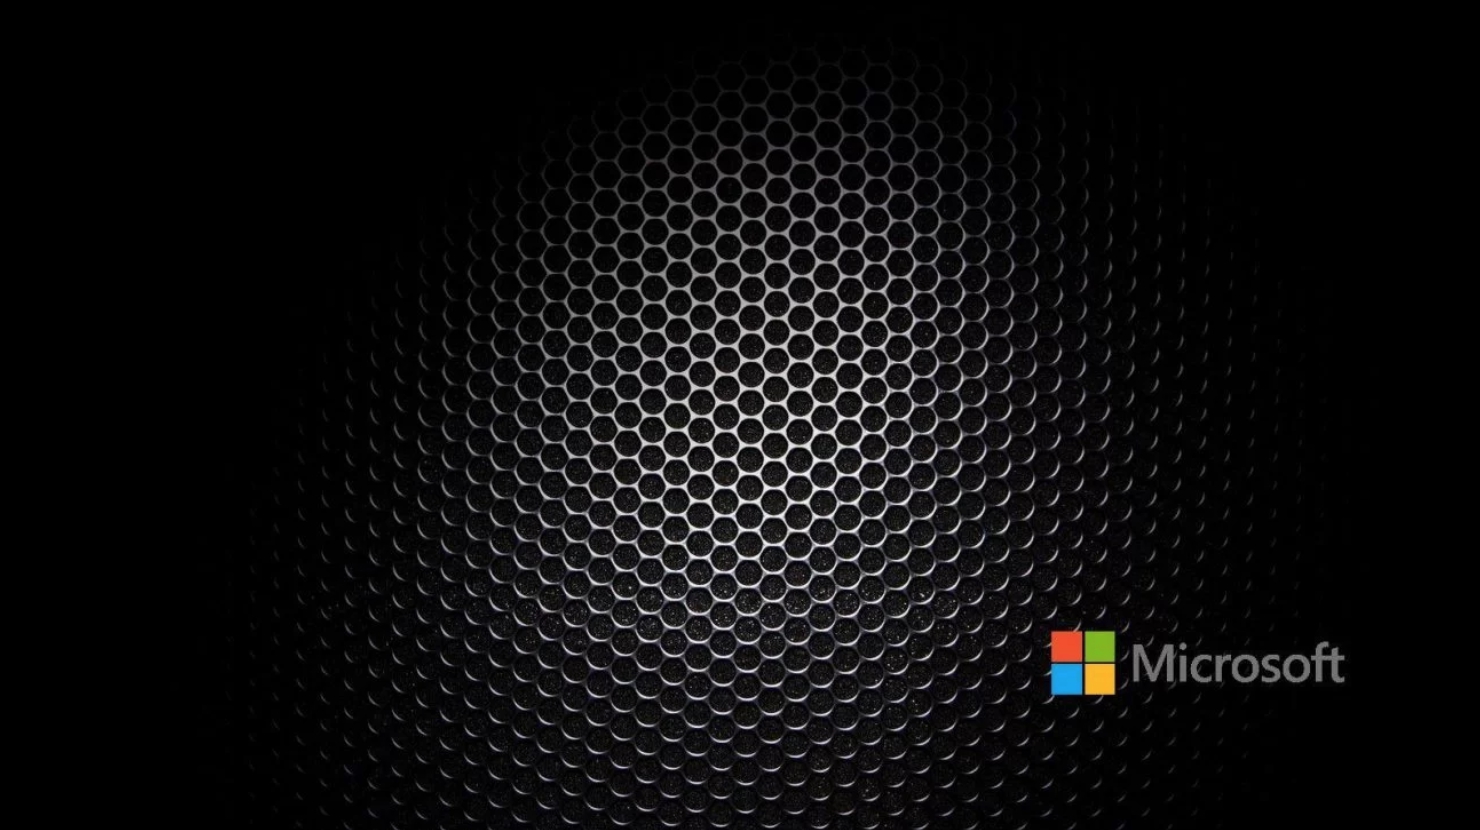 Какой у смартфона Microsoft третий экран?